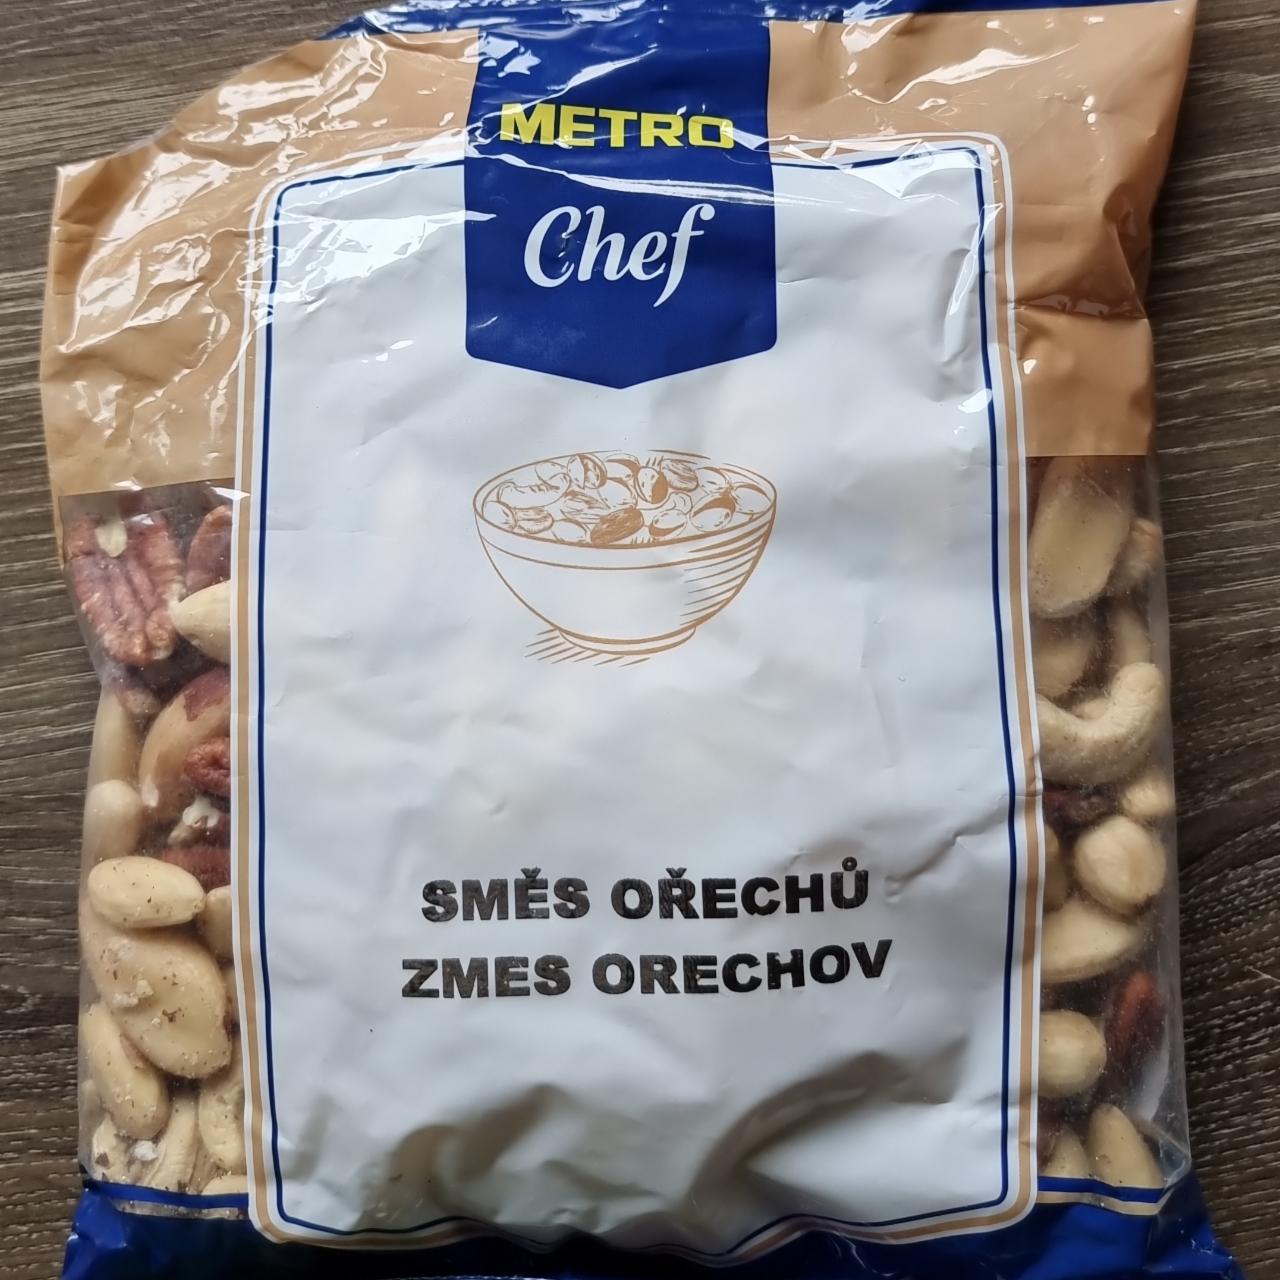 Fotografie - Zmes orechov Metro Chef